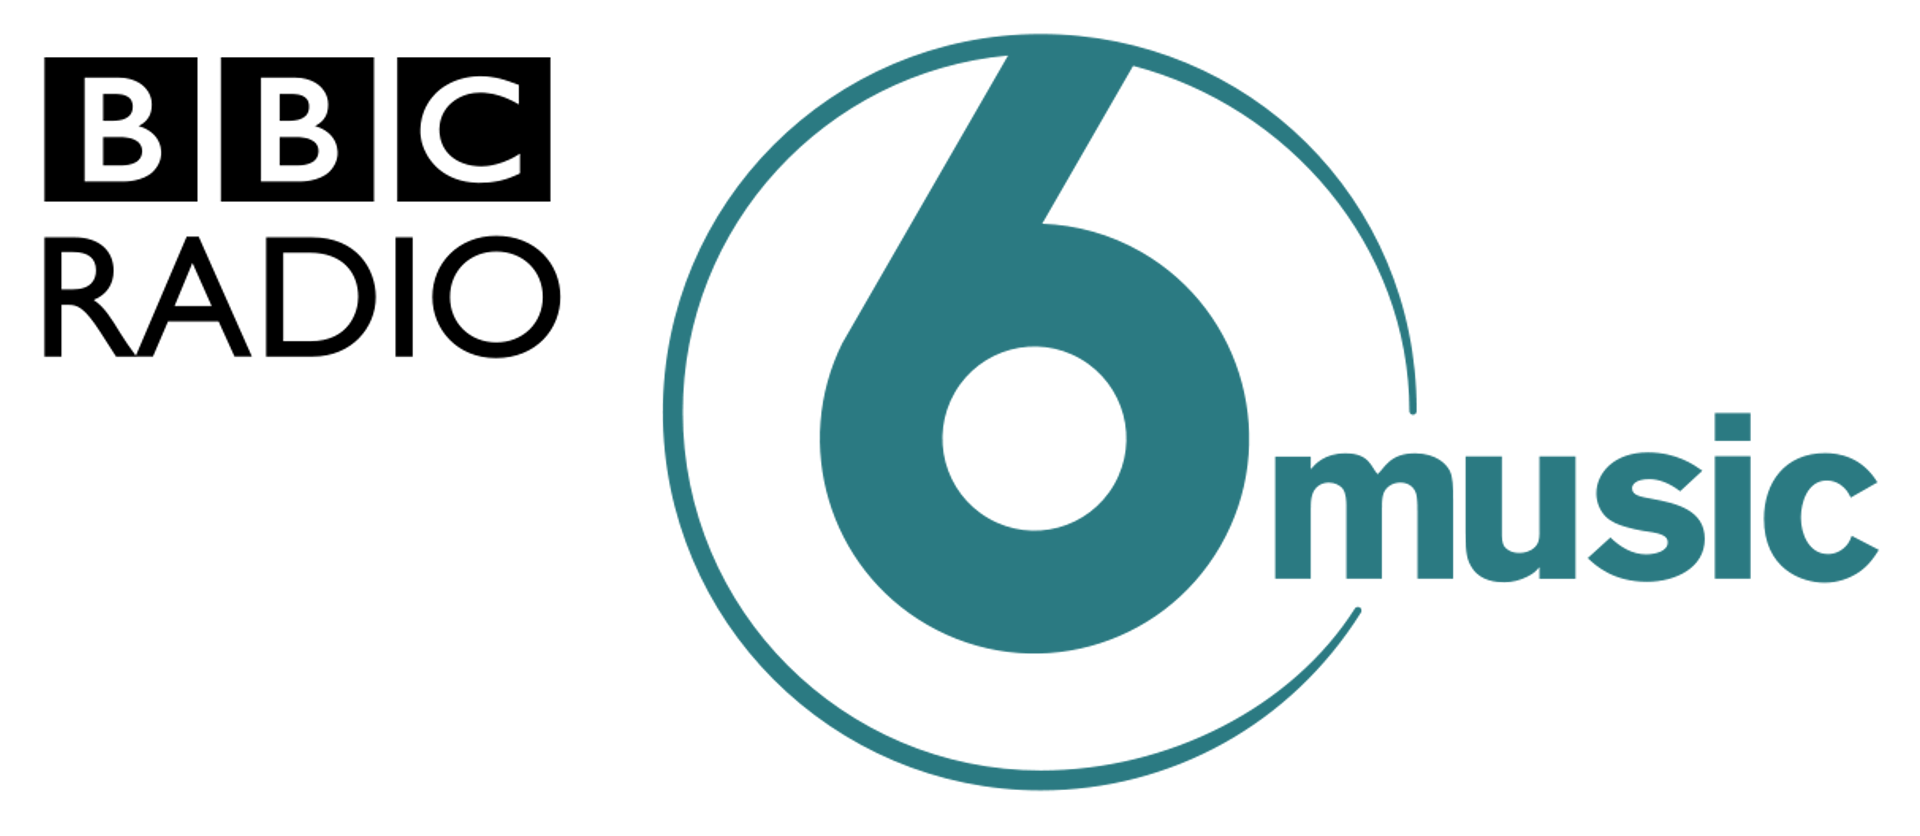 BBC 6 Music logo